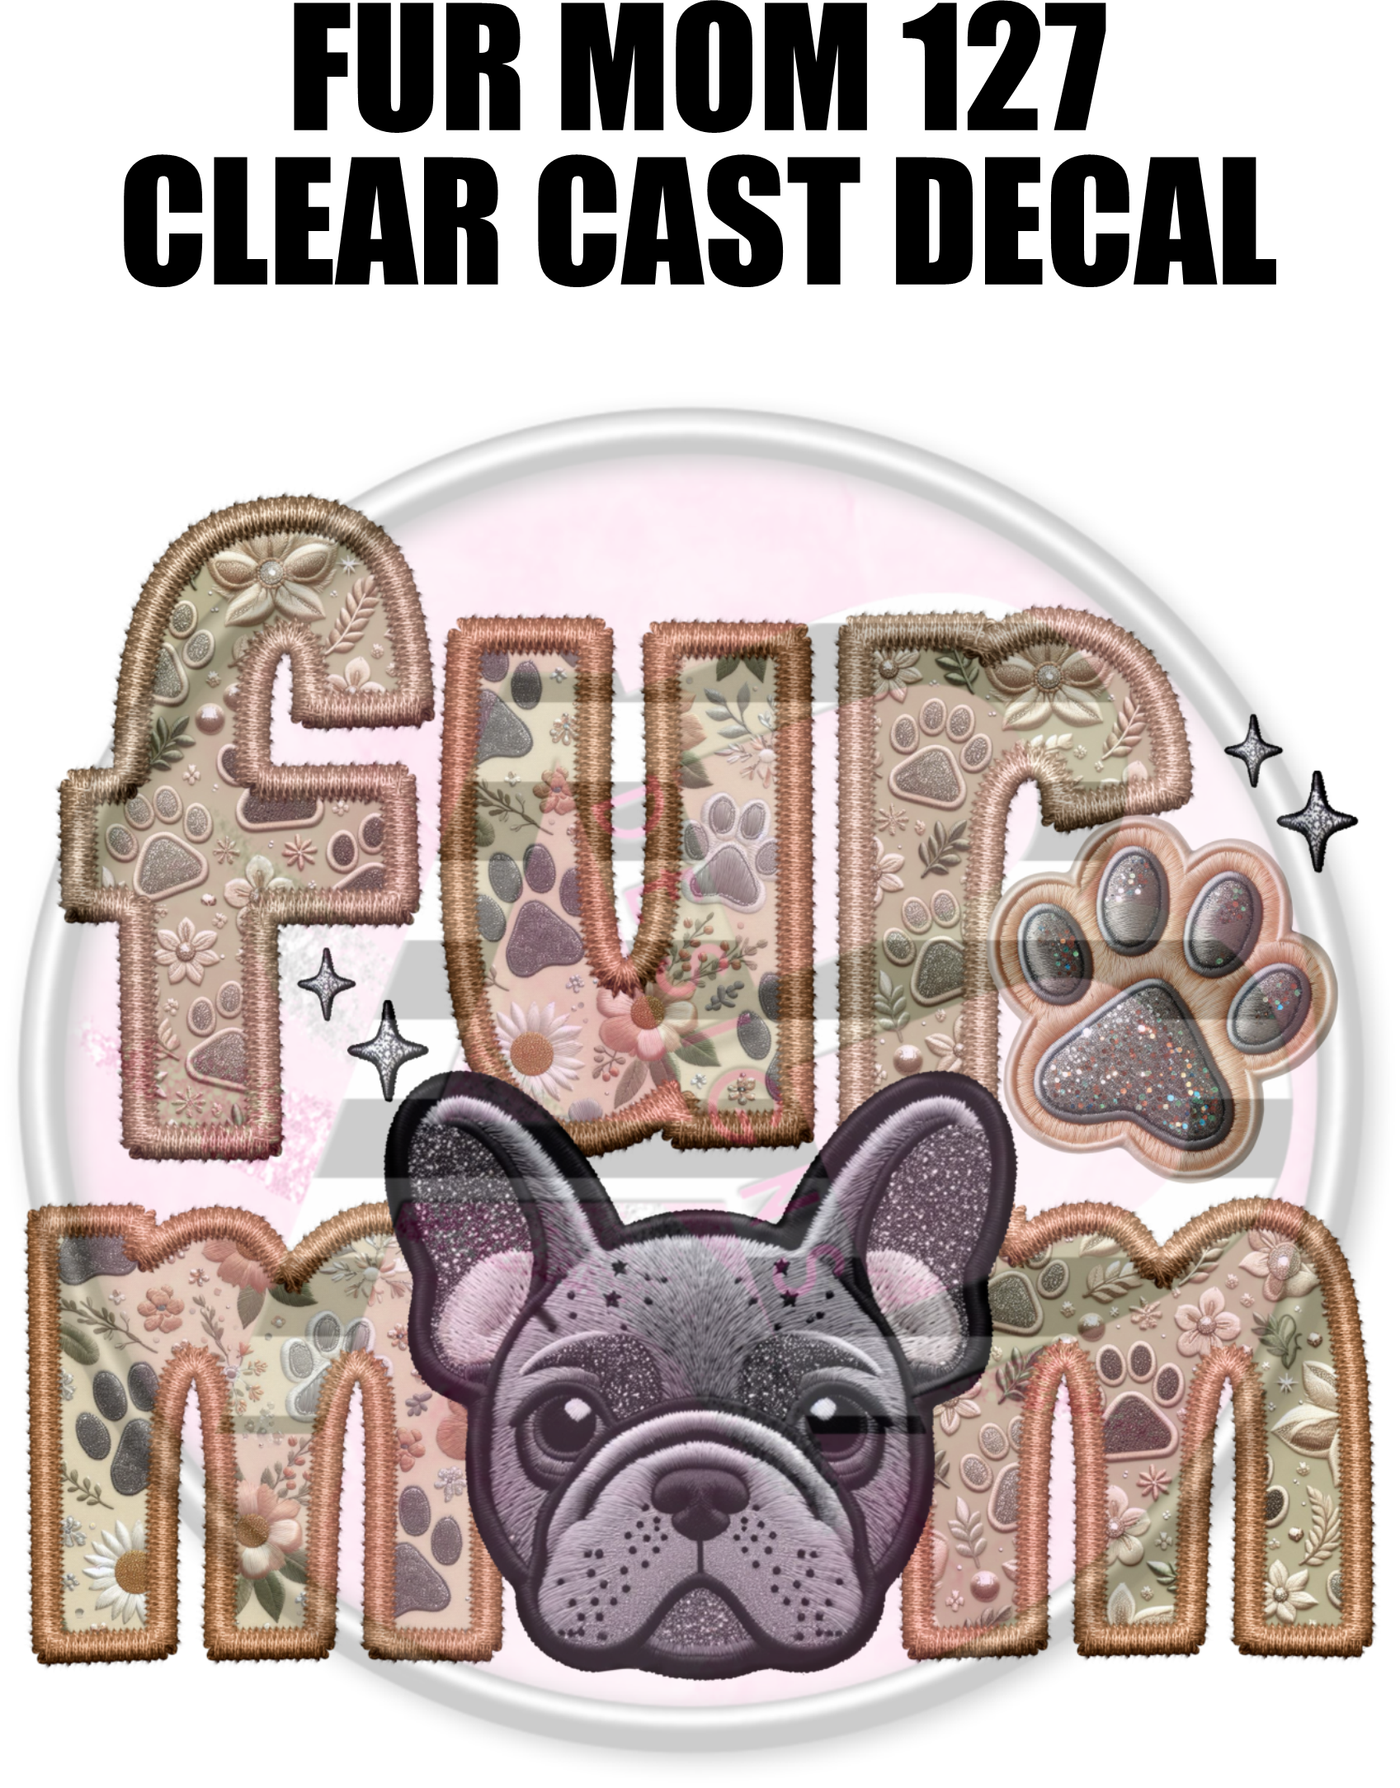 Fur Mom 127 - Clear Cast Decal